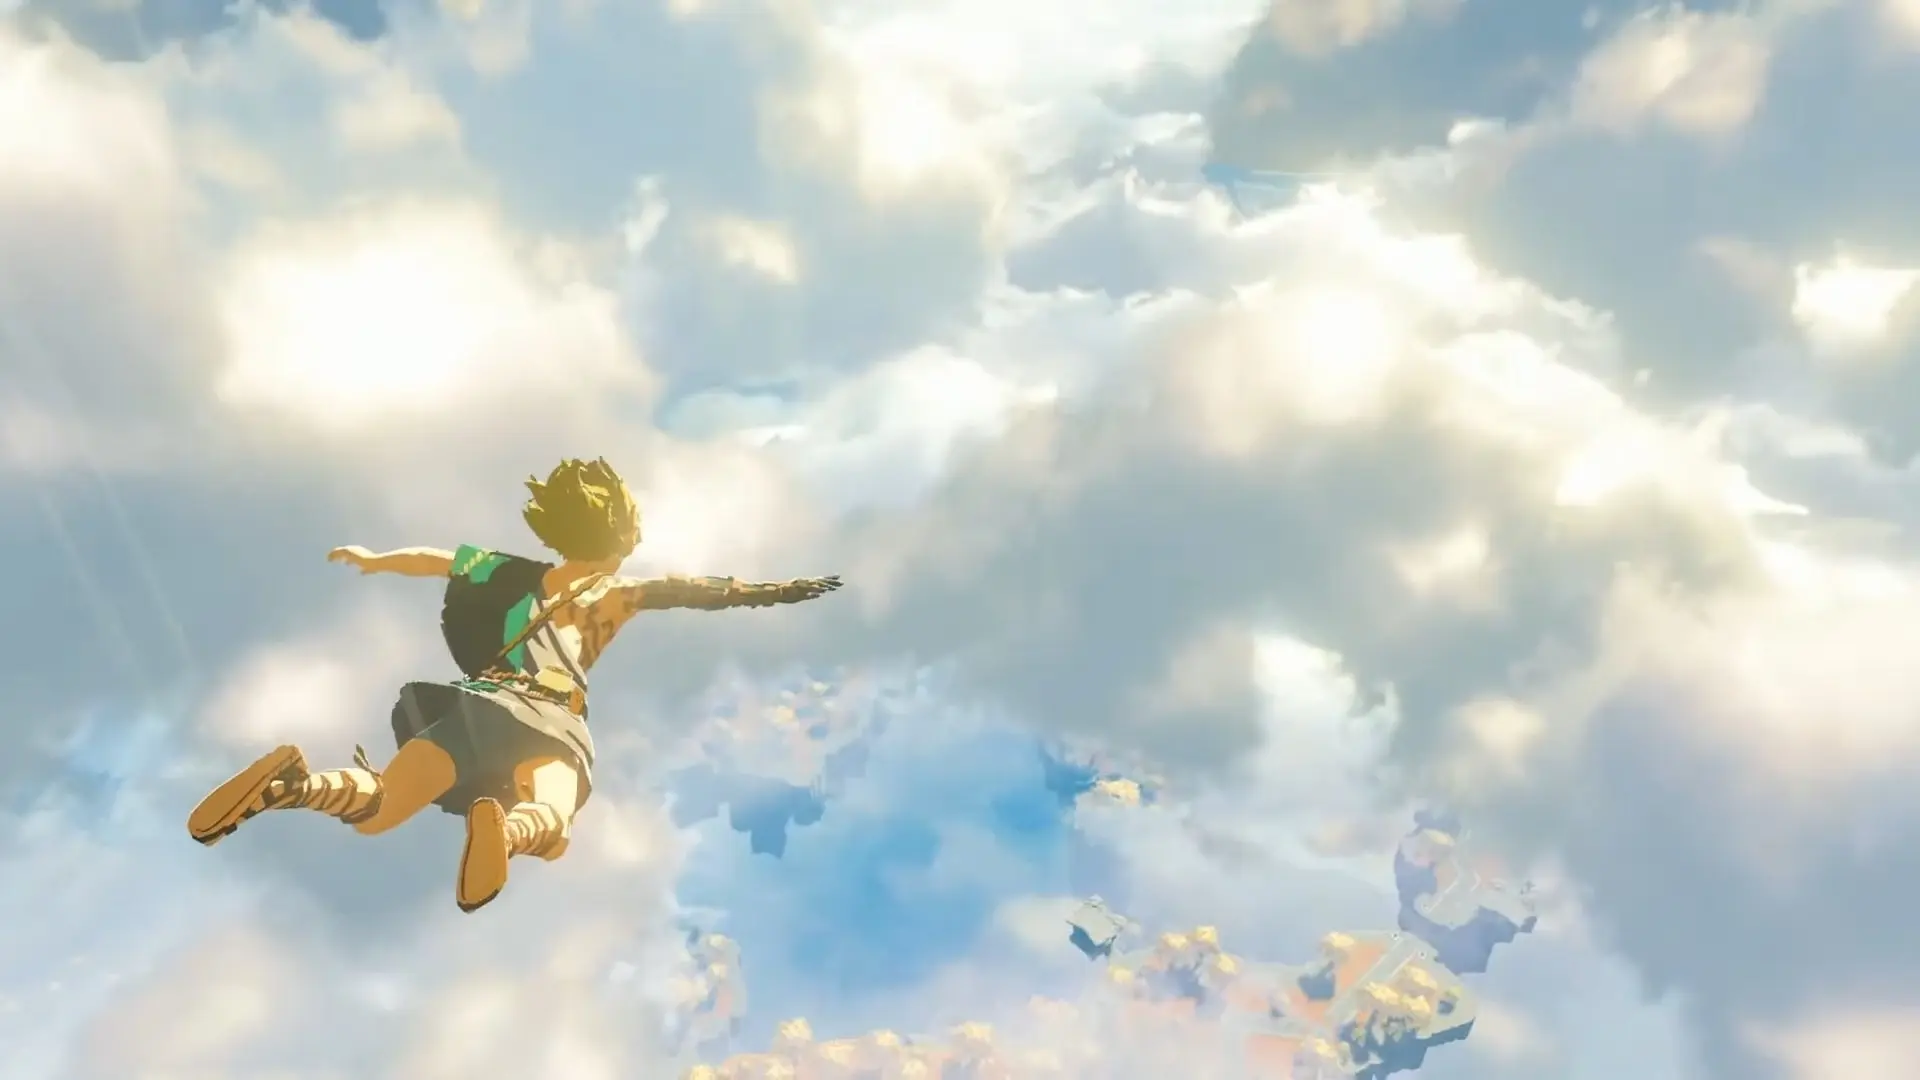 La suite de Zelda : Breath of the Wild reportée à 2023